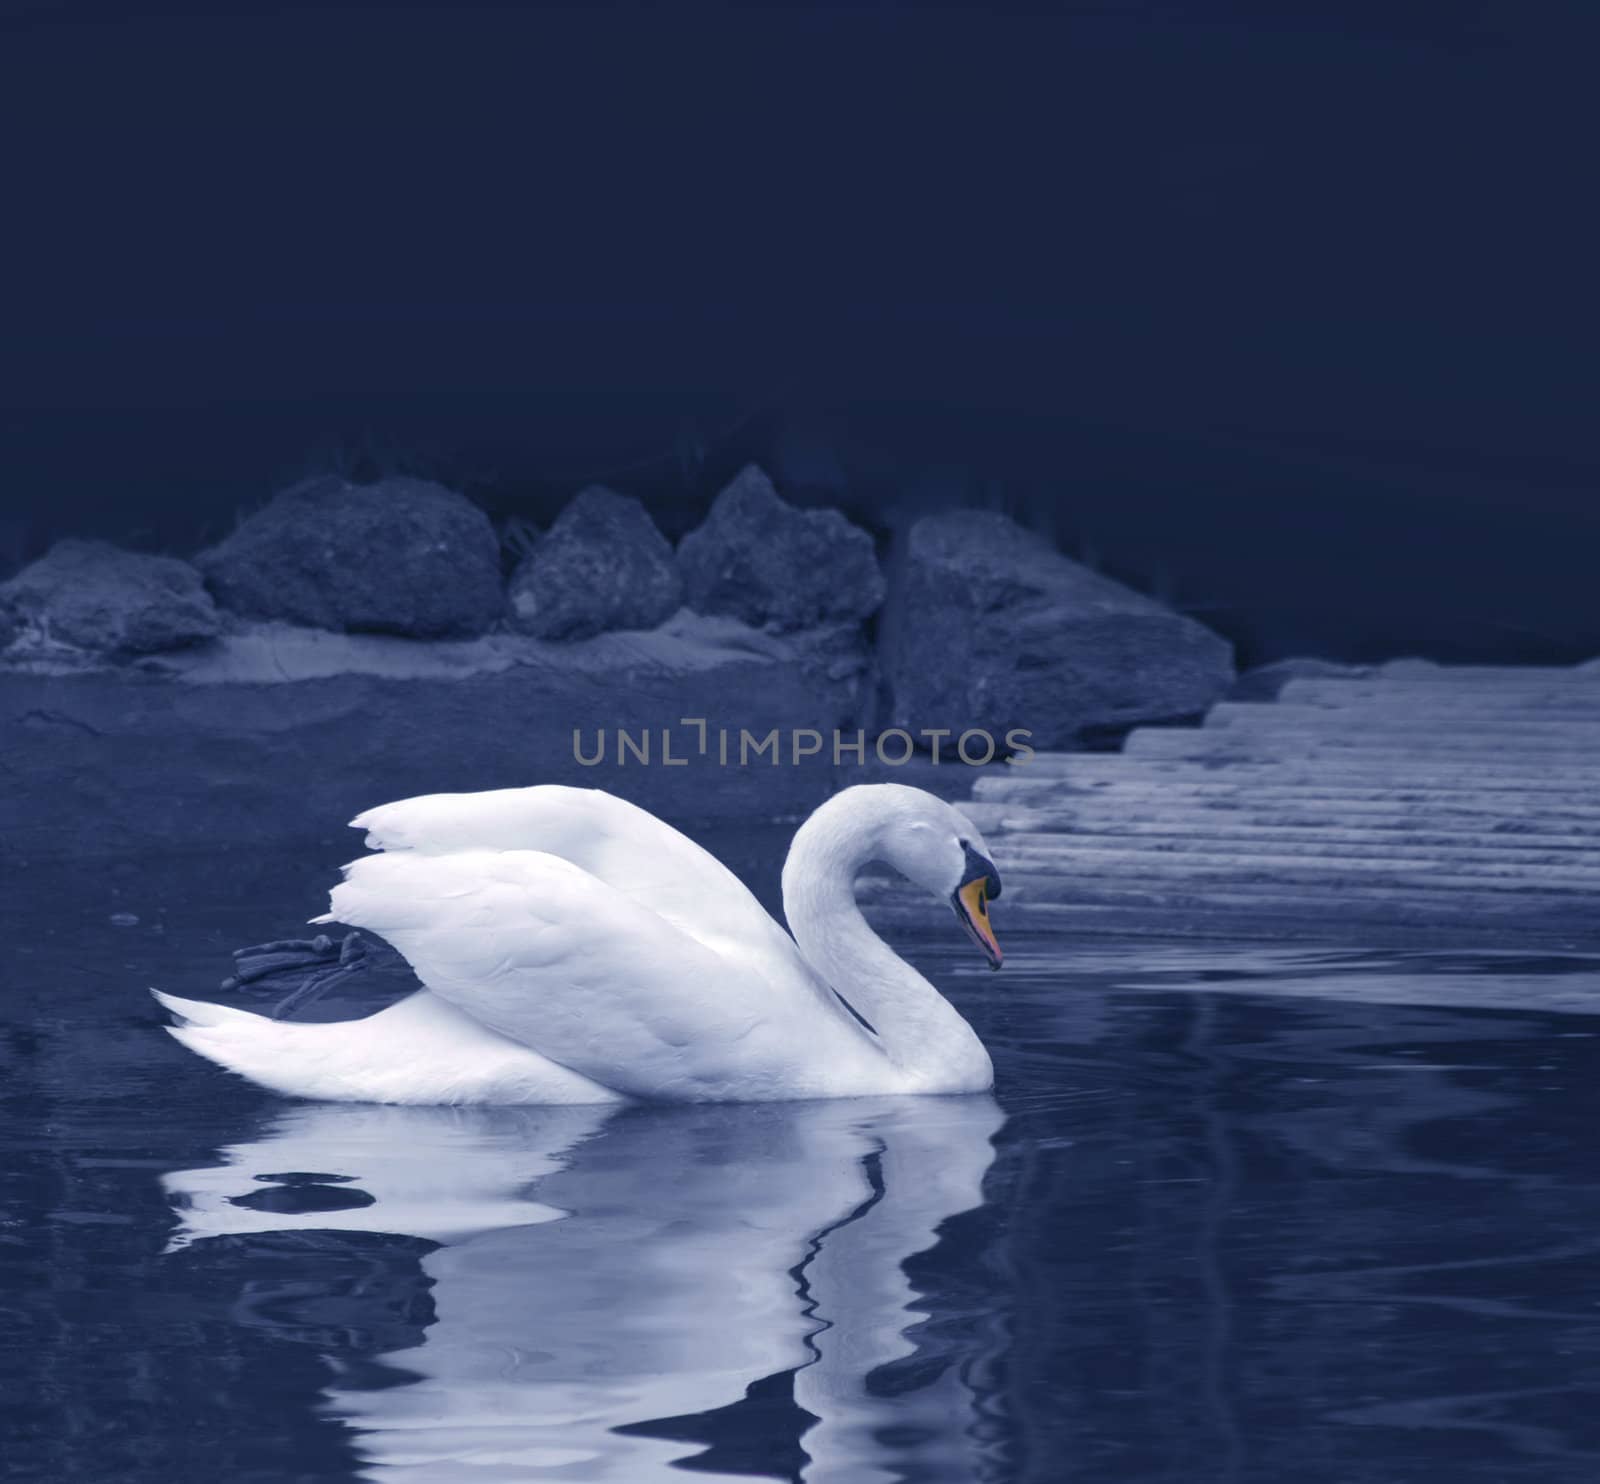 Reflection of white swan on a dark calm pond